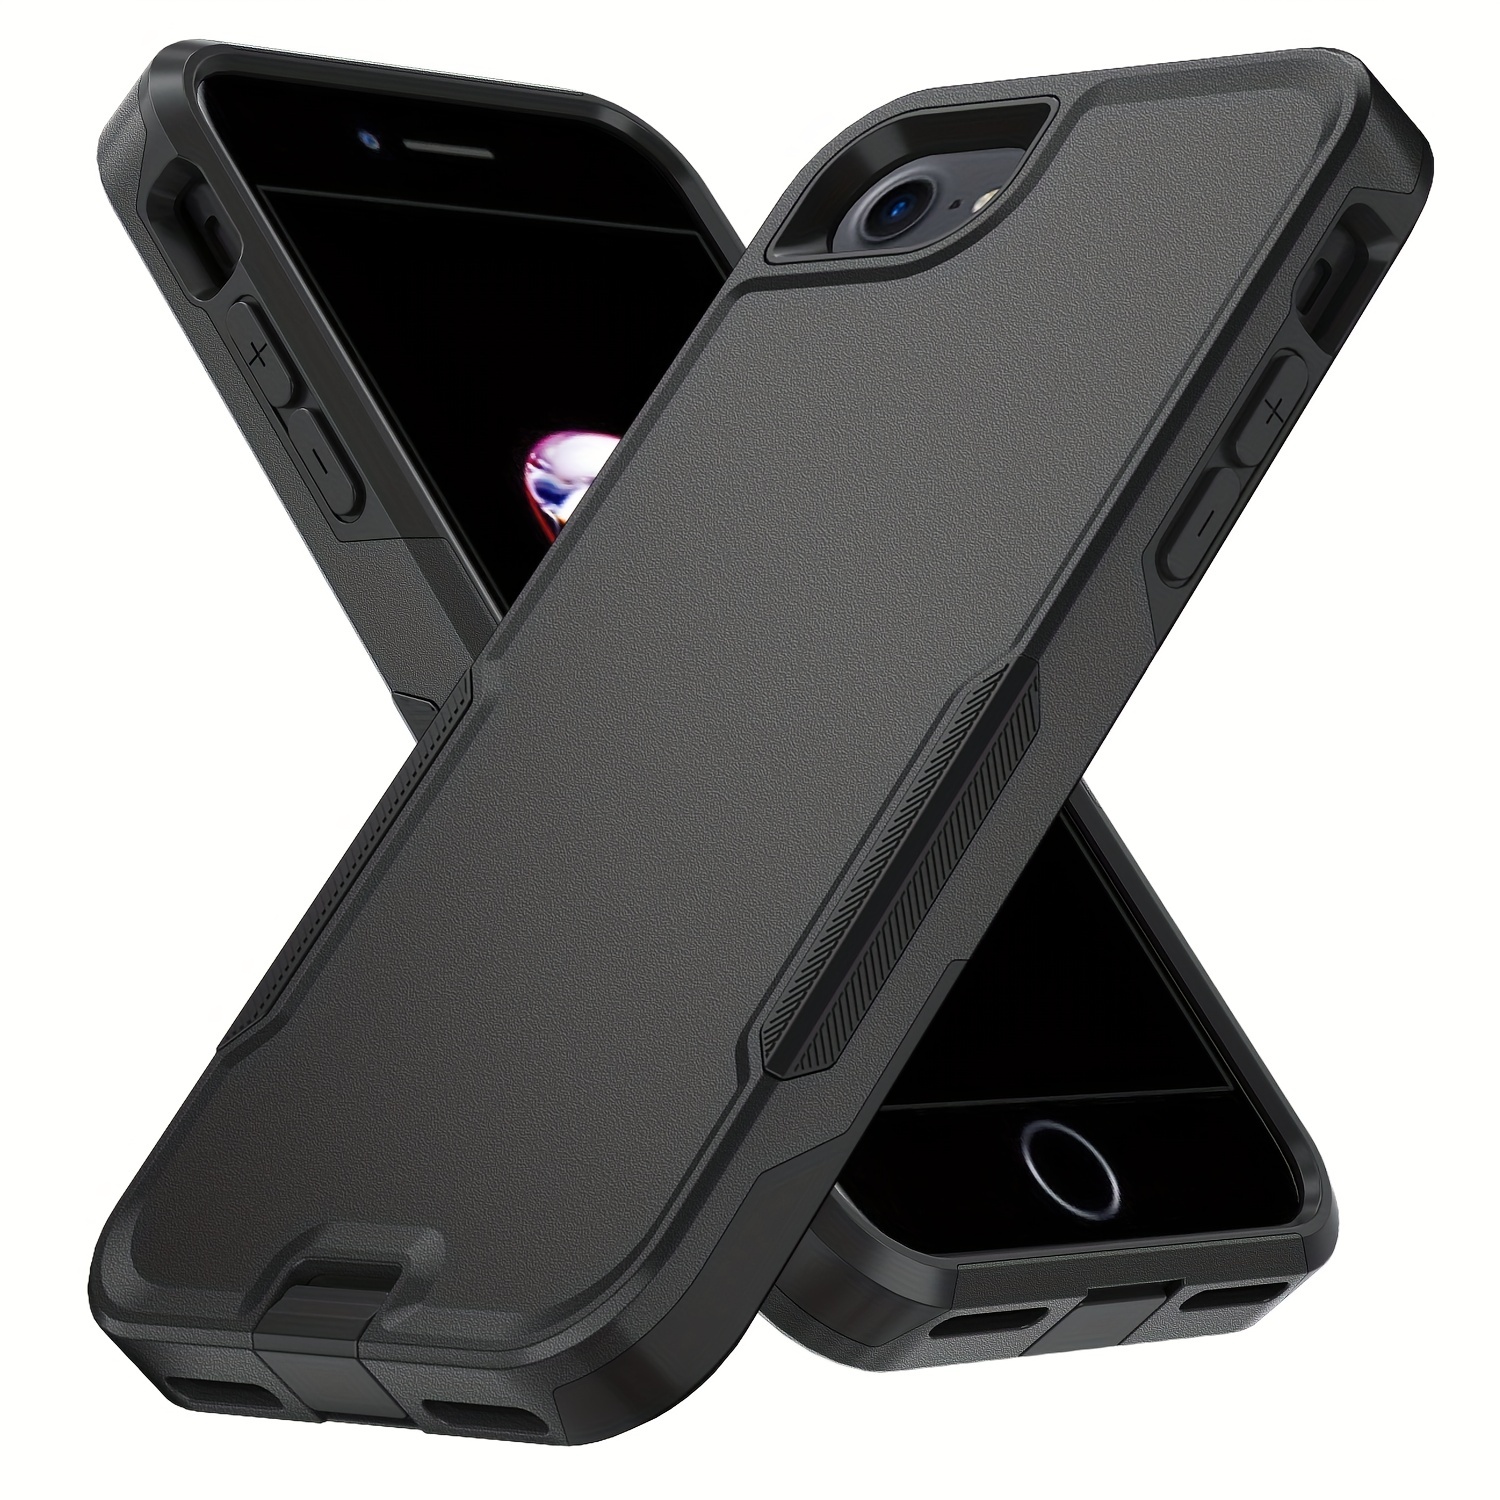 Carcasa Exoframe Para iPhone X/Xs Plata